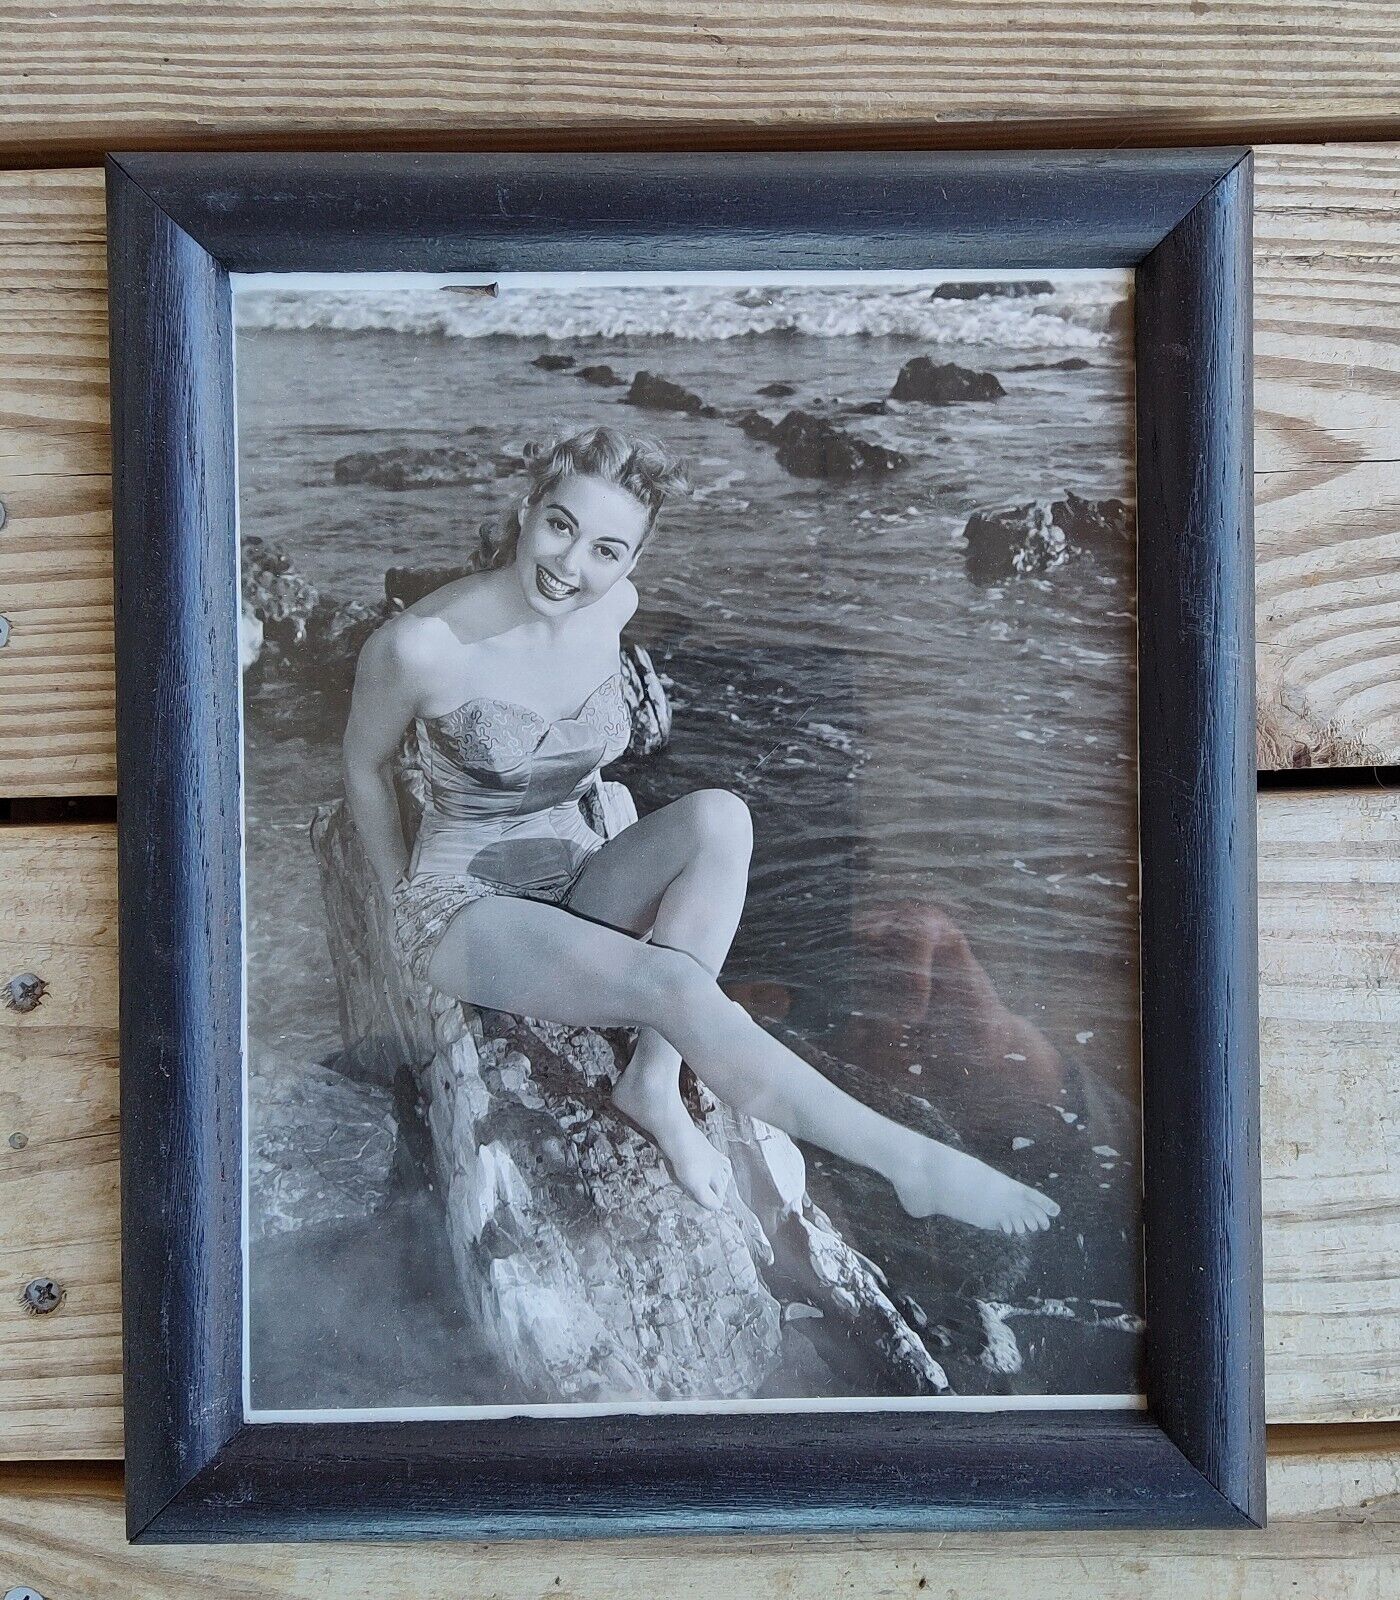 Vintage 1950's Pinup Photo Actress Adele Mara RKO press photo framed.